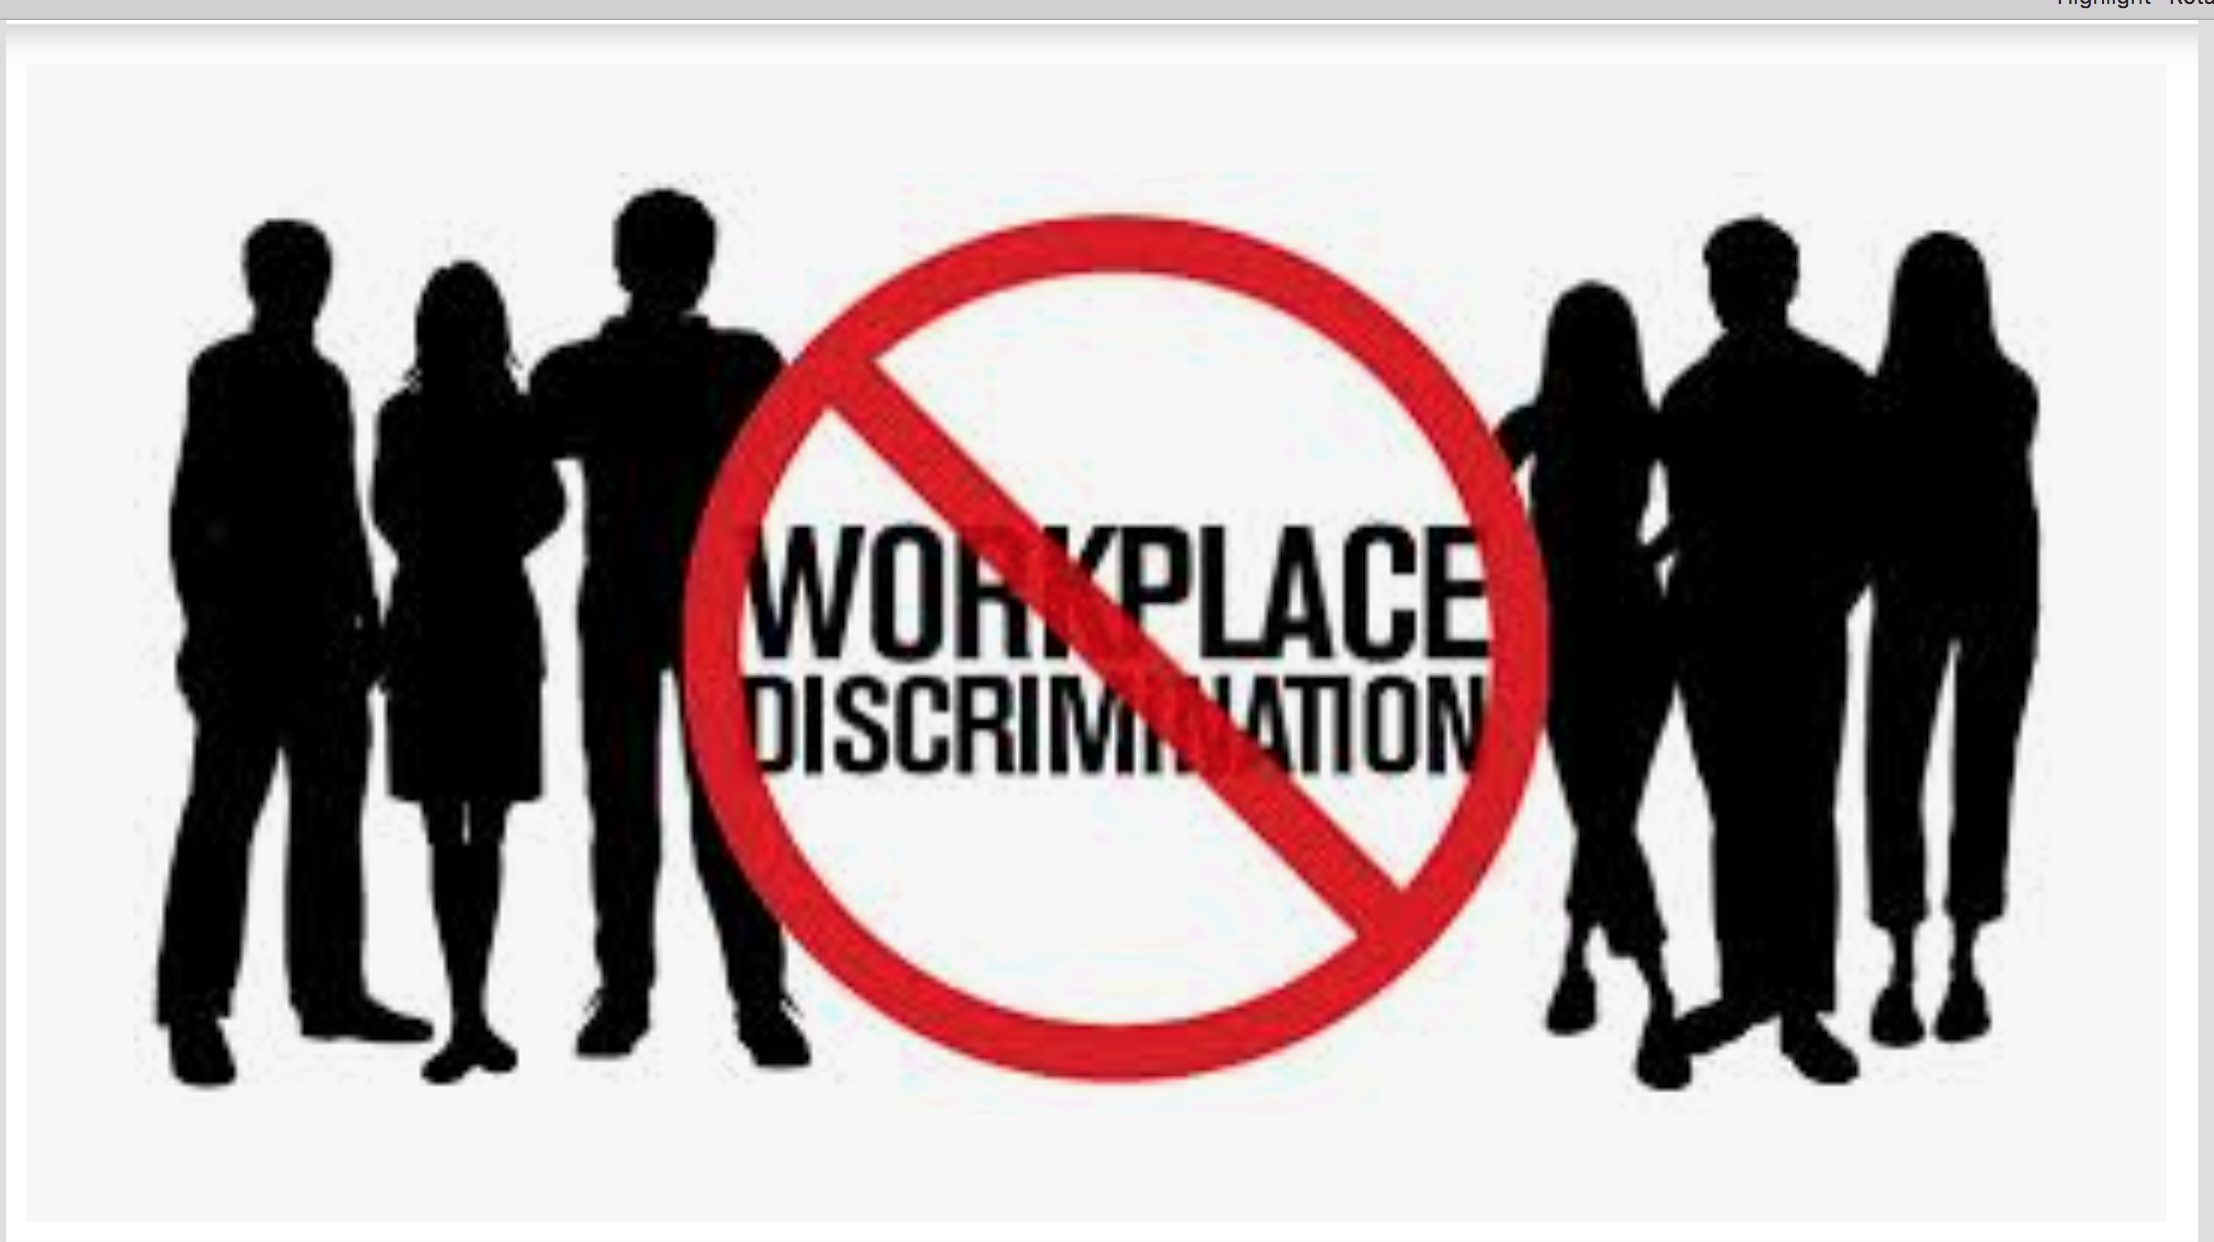 Дискриминация члена. Дискриминация картинки. Дискриминация рисунок. Дискриминация на рынке труда. Трудовая дискриминация.